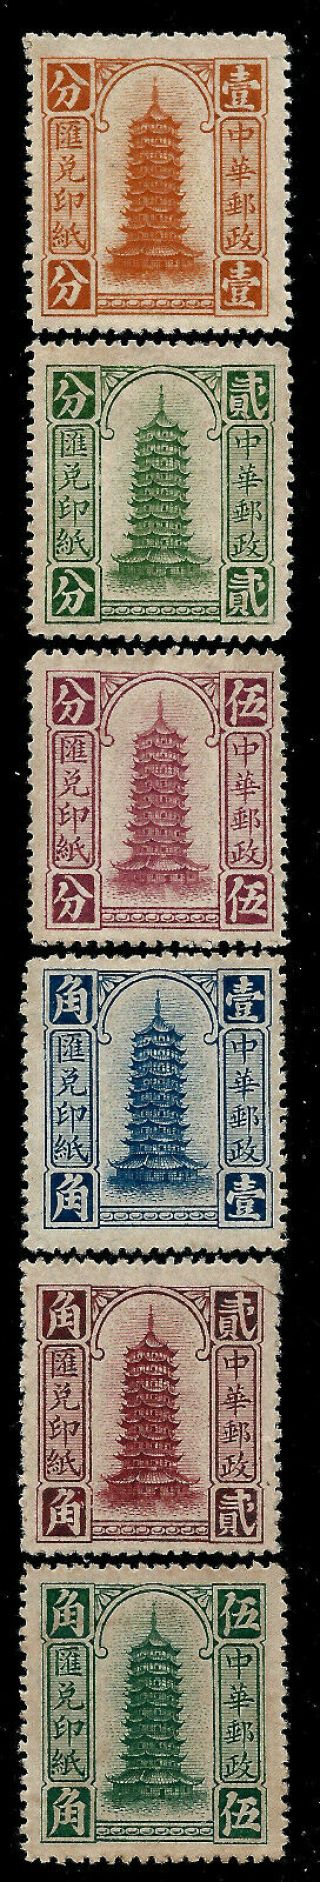 1925 Peking Printing Pagoda Design 1c - 50c Postal Money Order Stamp Revenue Fee